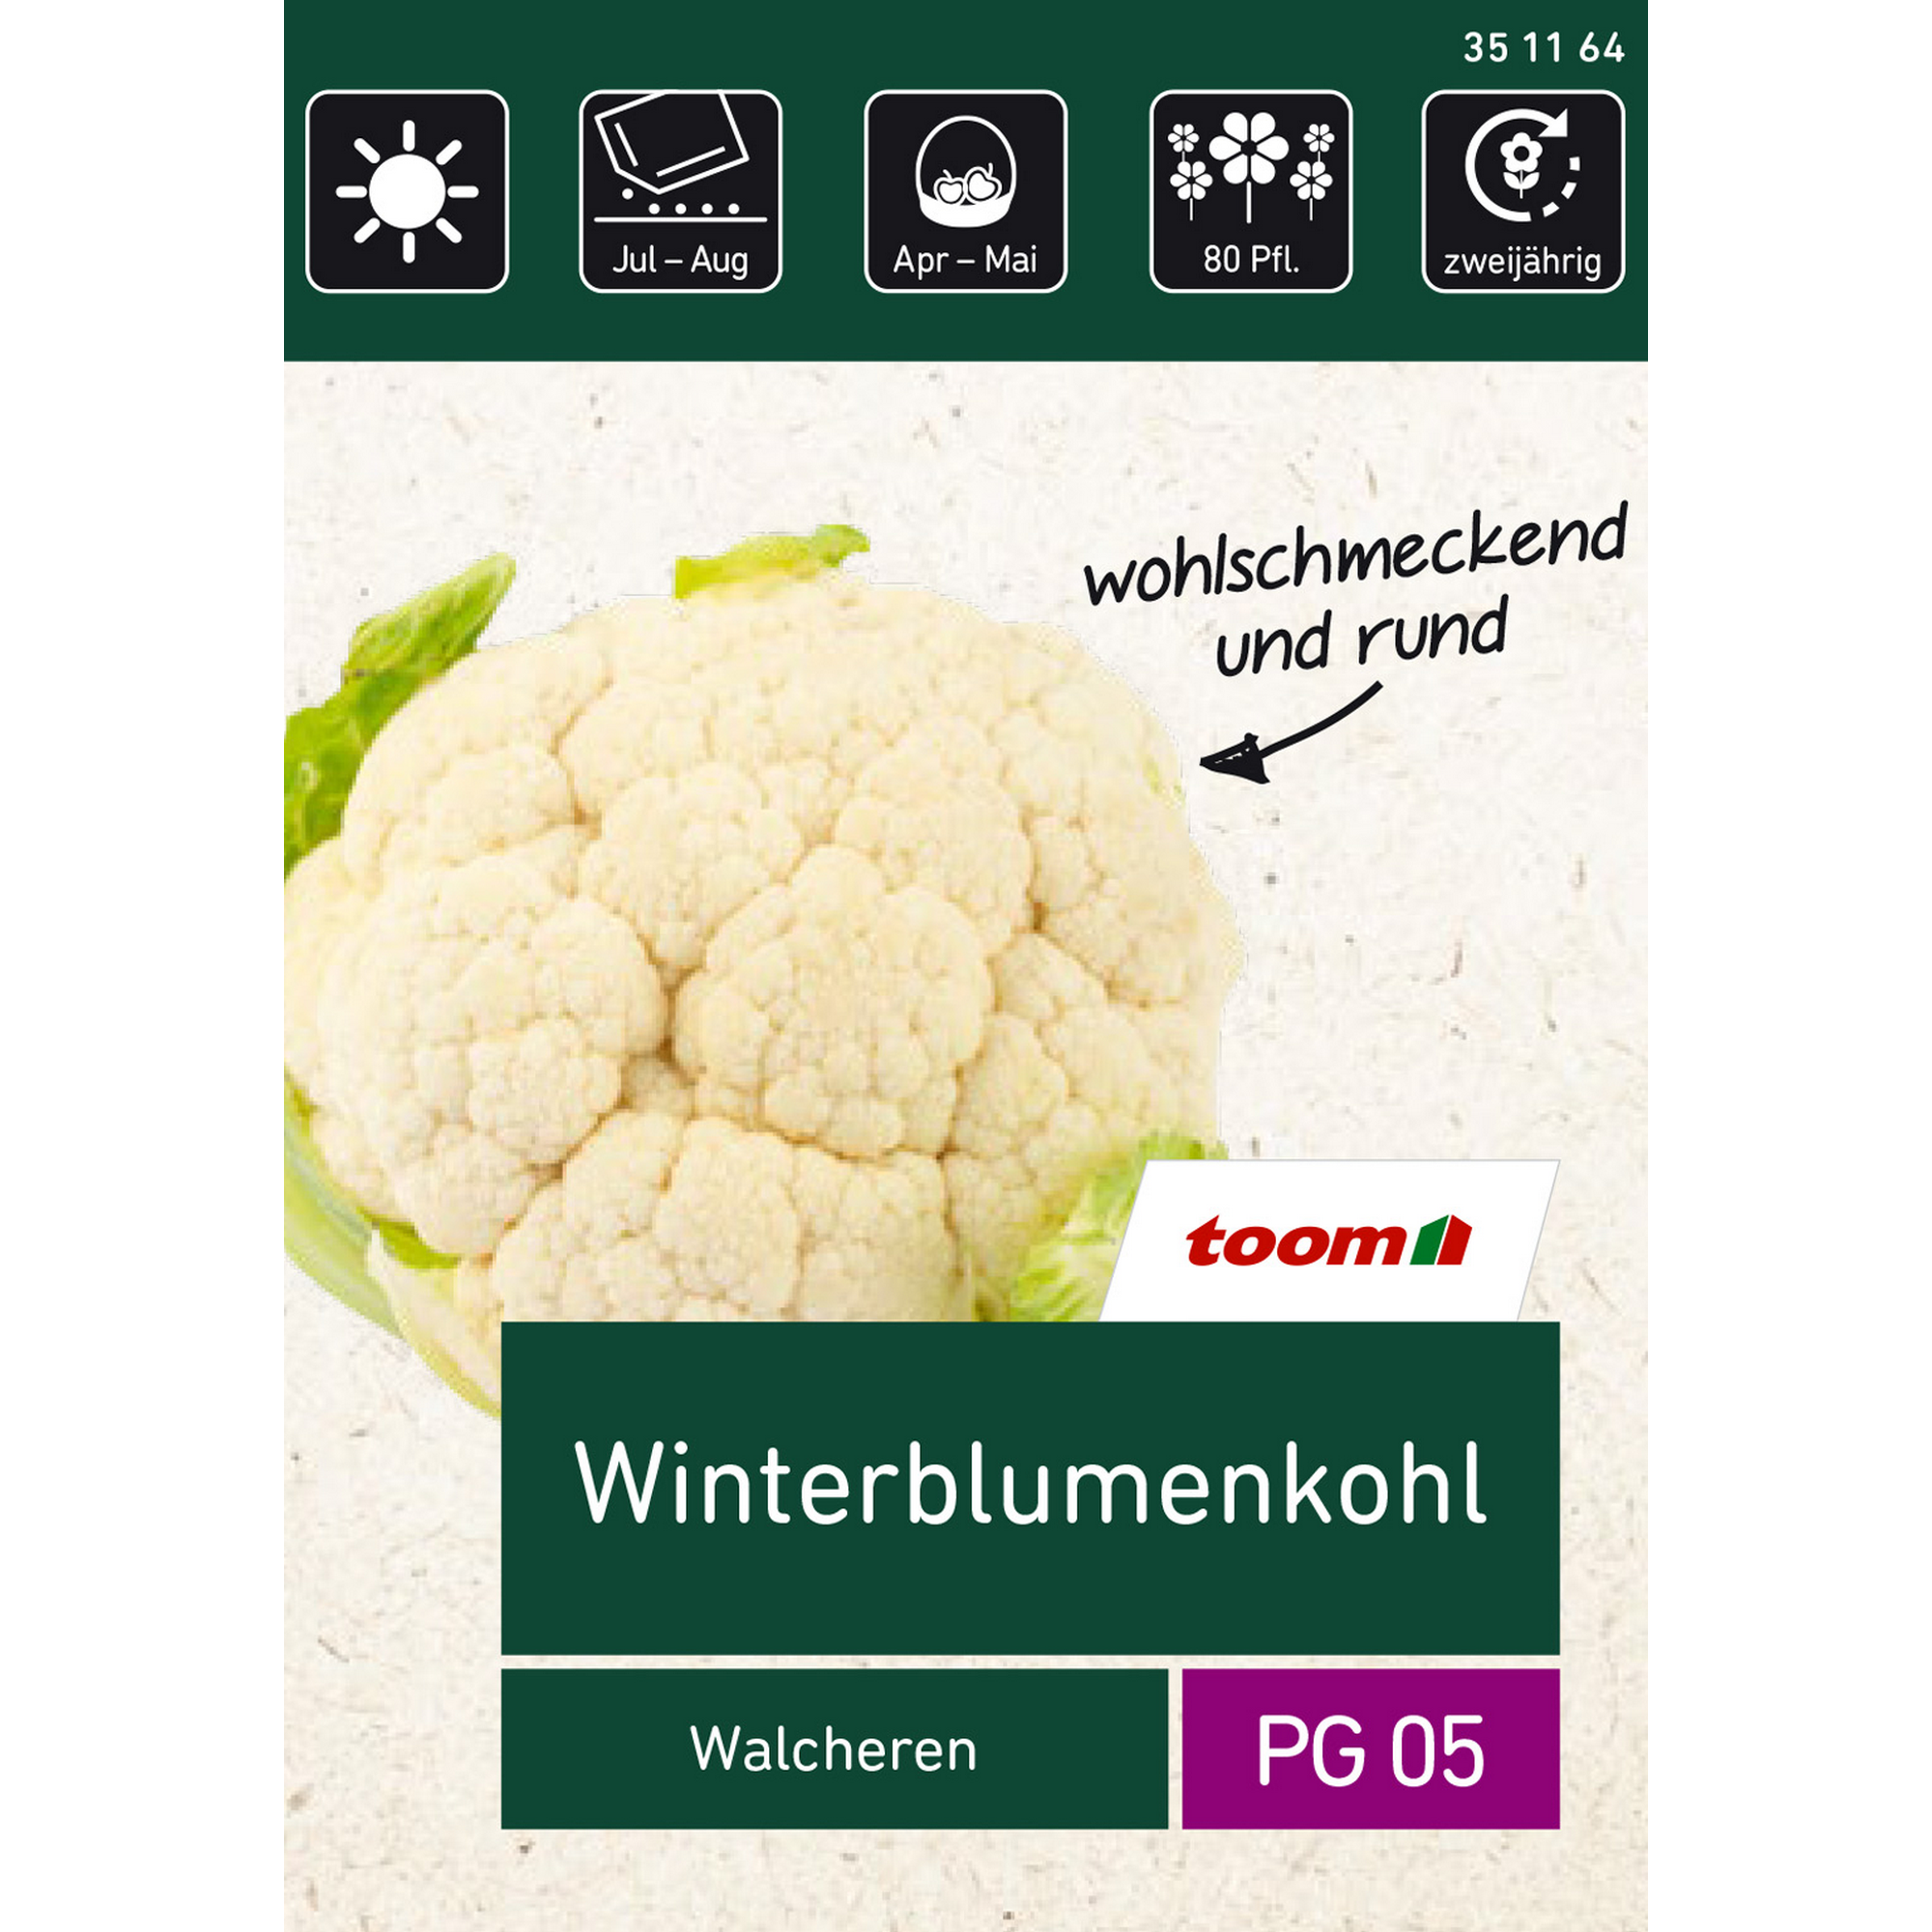 Winterblumenkohl Walcheren + product picture